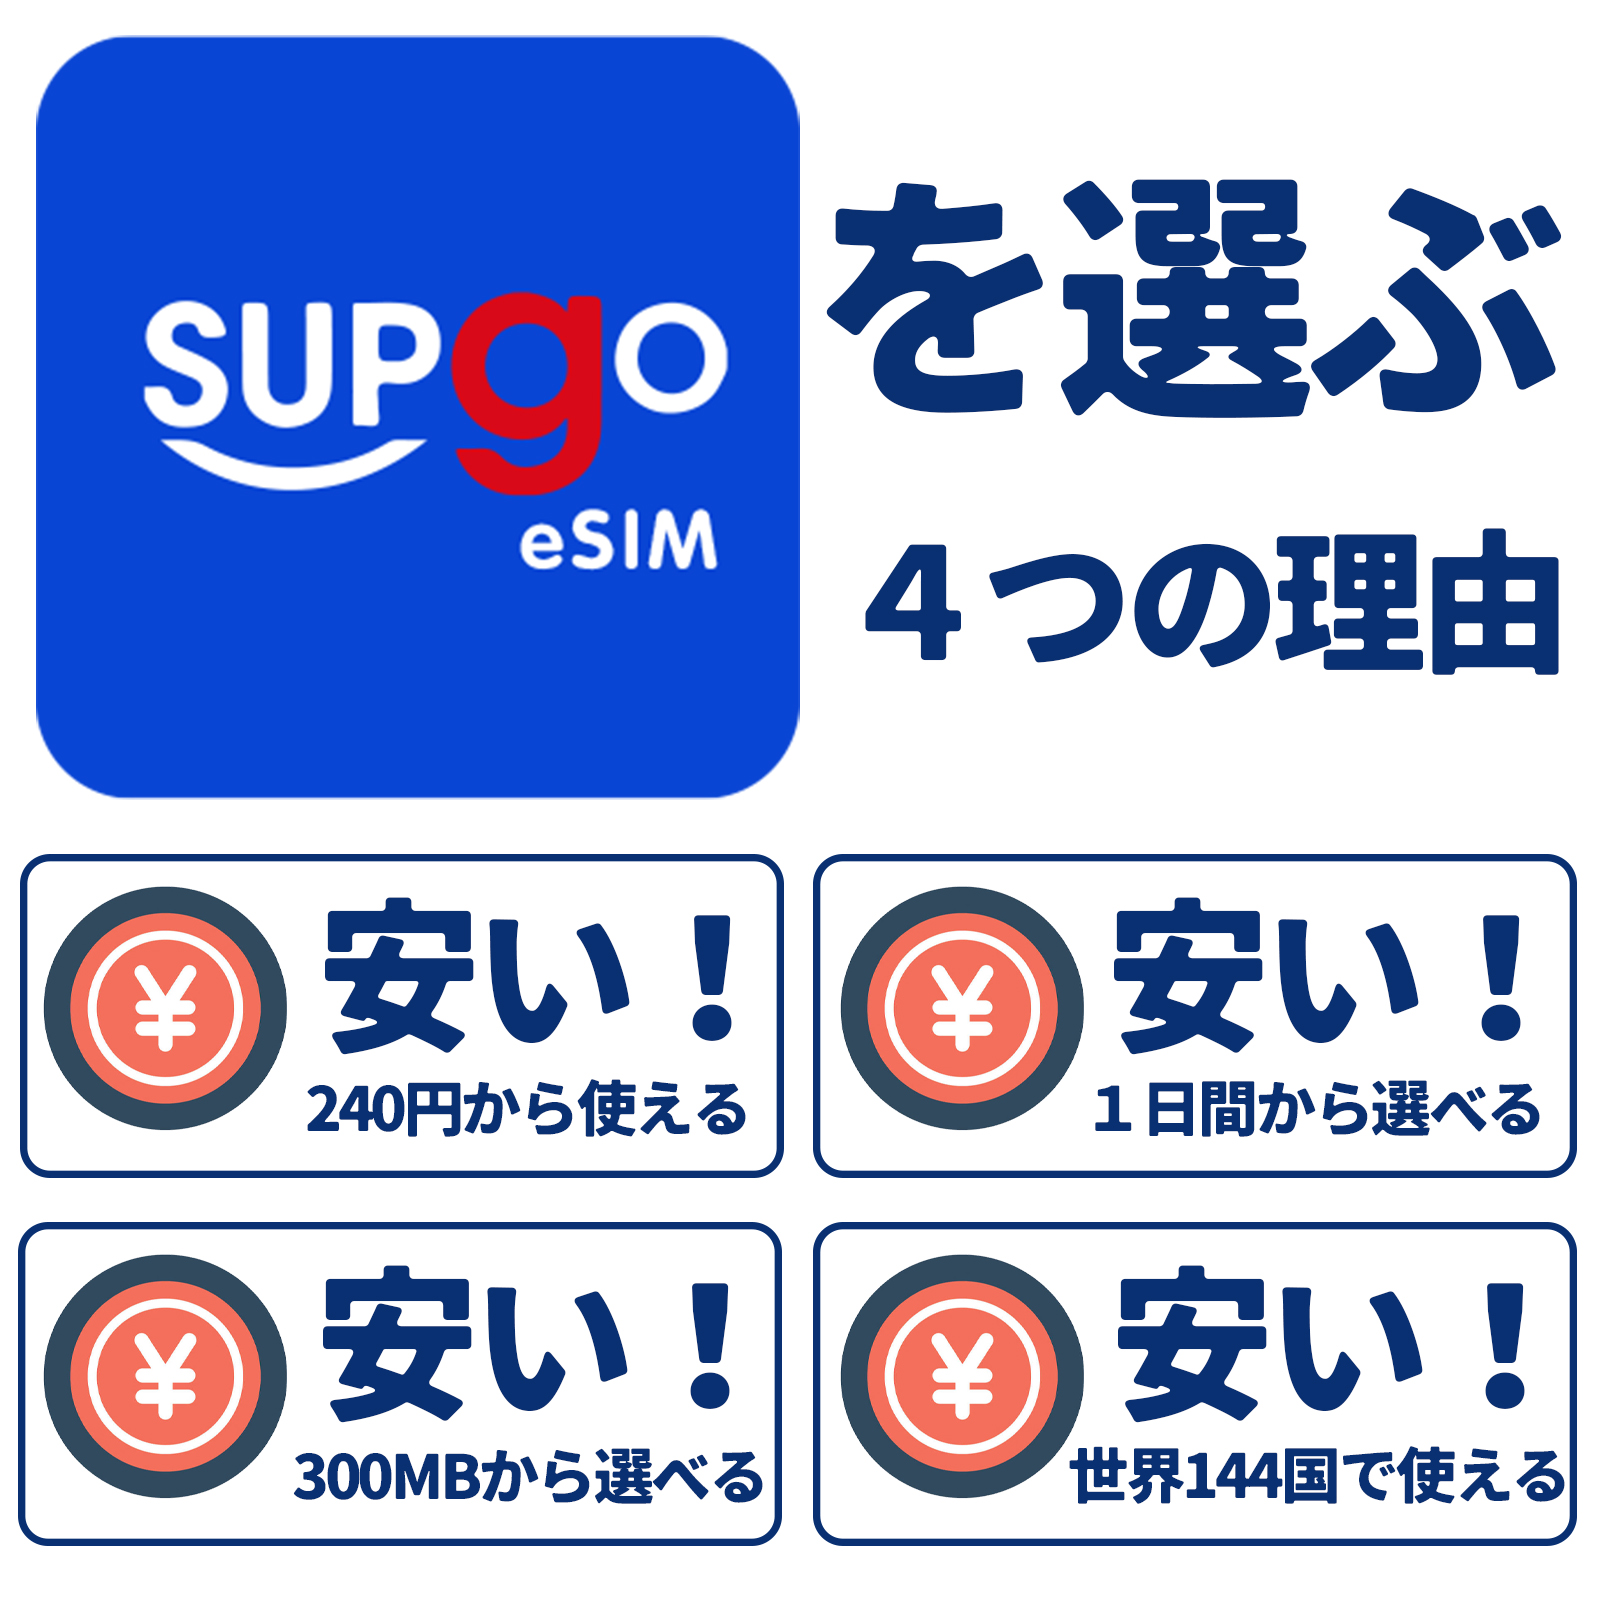 eSIM ジャパン 日本 JAPAN NIPPON 3日間 5日間 7日間 10日間 15日間 20日間 30日間 500MB 1GB 2GB 3GB simカード 一時帰国 留学 短期 出張